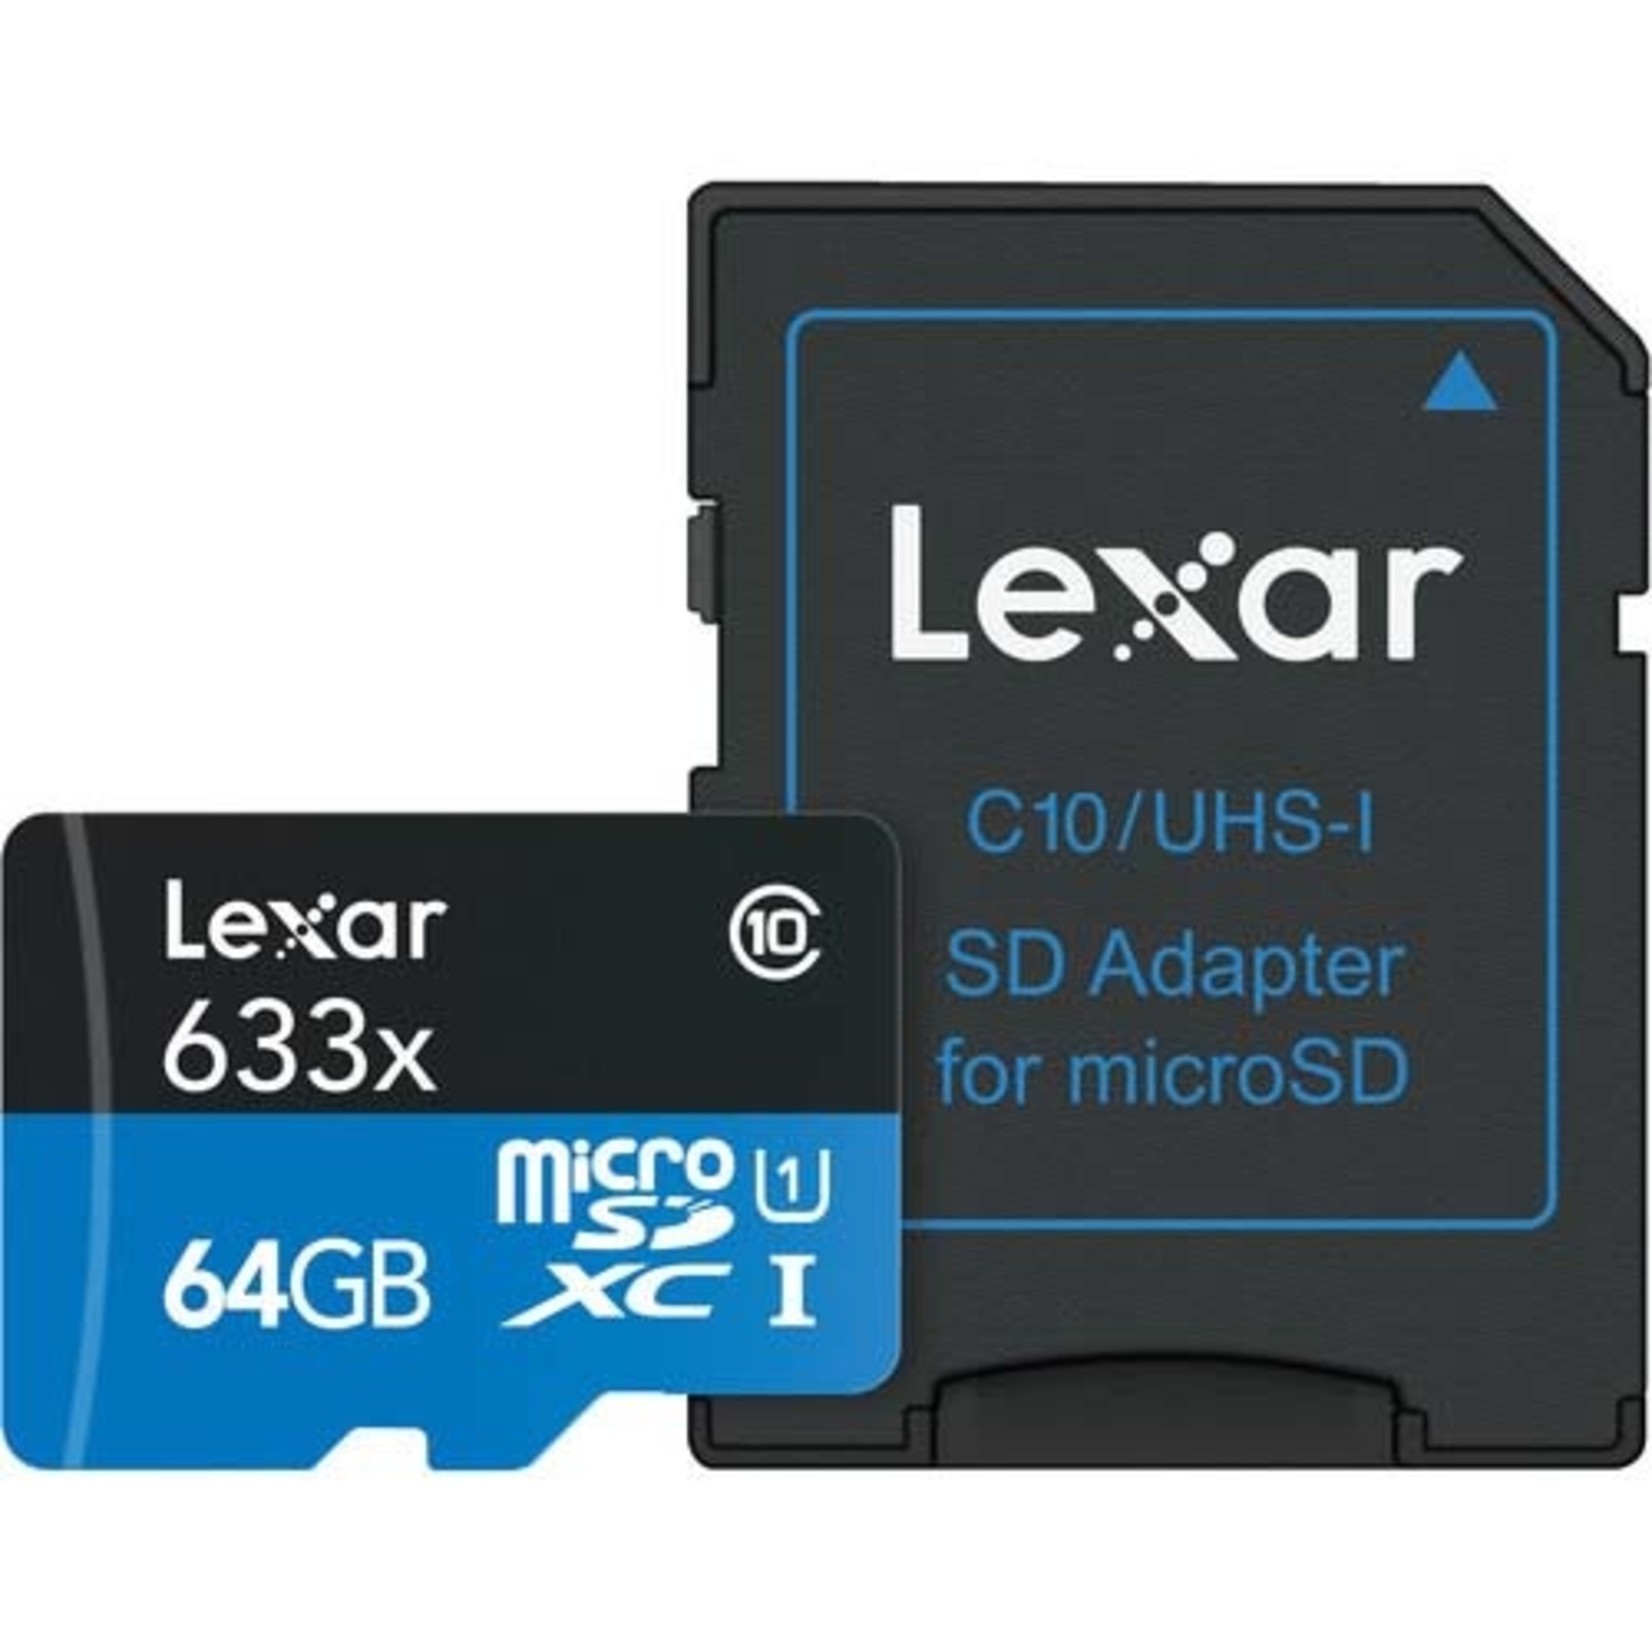 Lexar Lexar 633x UHS-I microSDXC 64GB Memory Card with SD Adapter